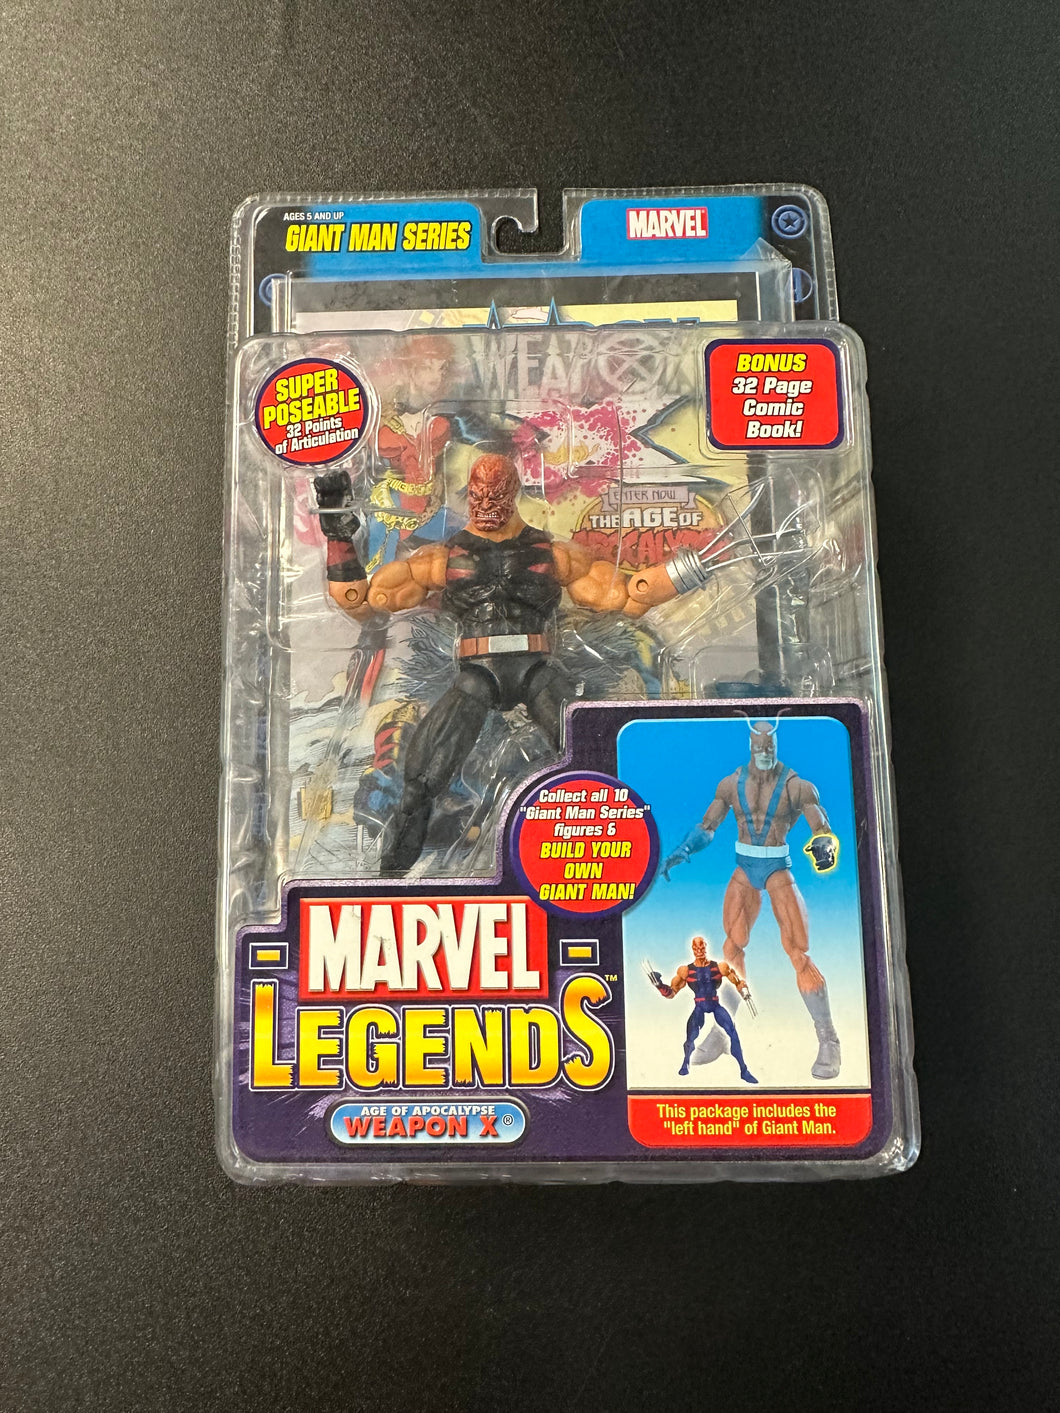 Toy Biz Marvel Legends Weapon X Giant Man Series